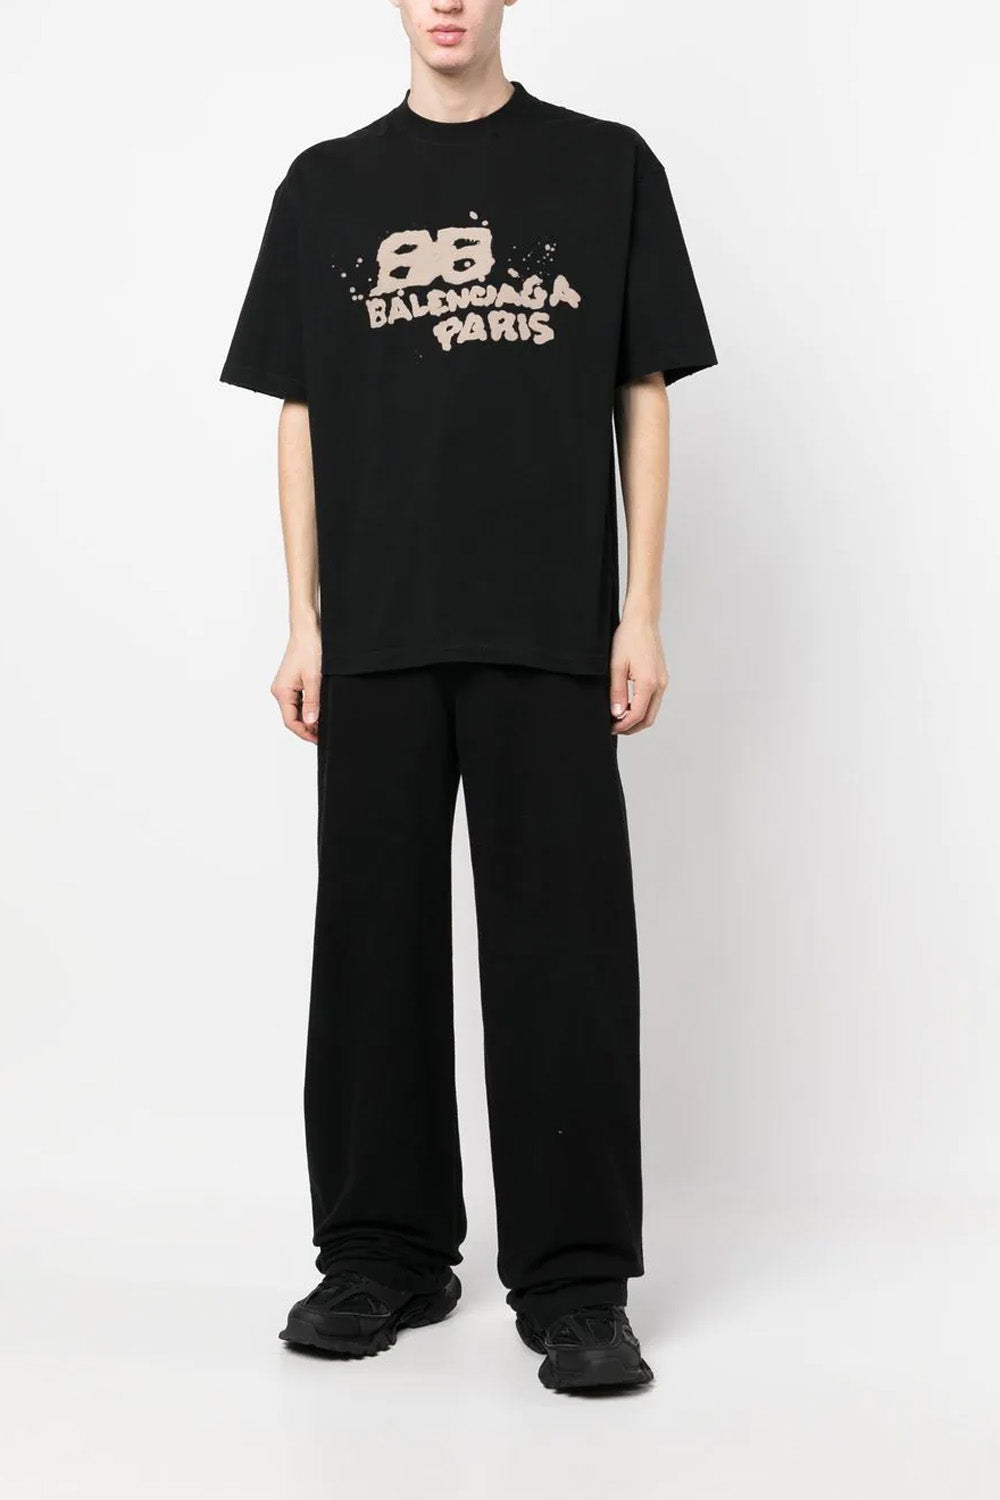 Balenciaga logo-print short-sleeve black T-shirt